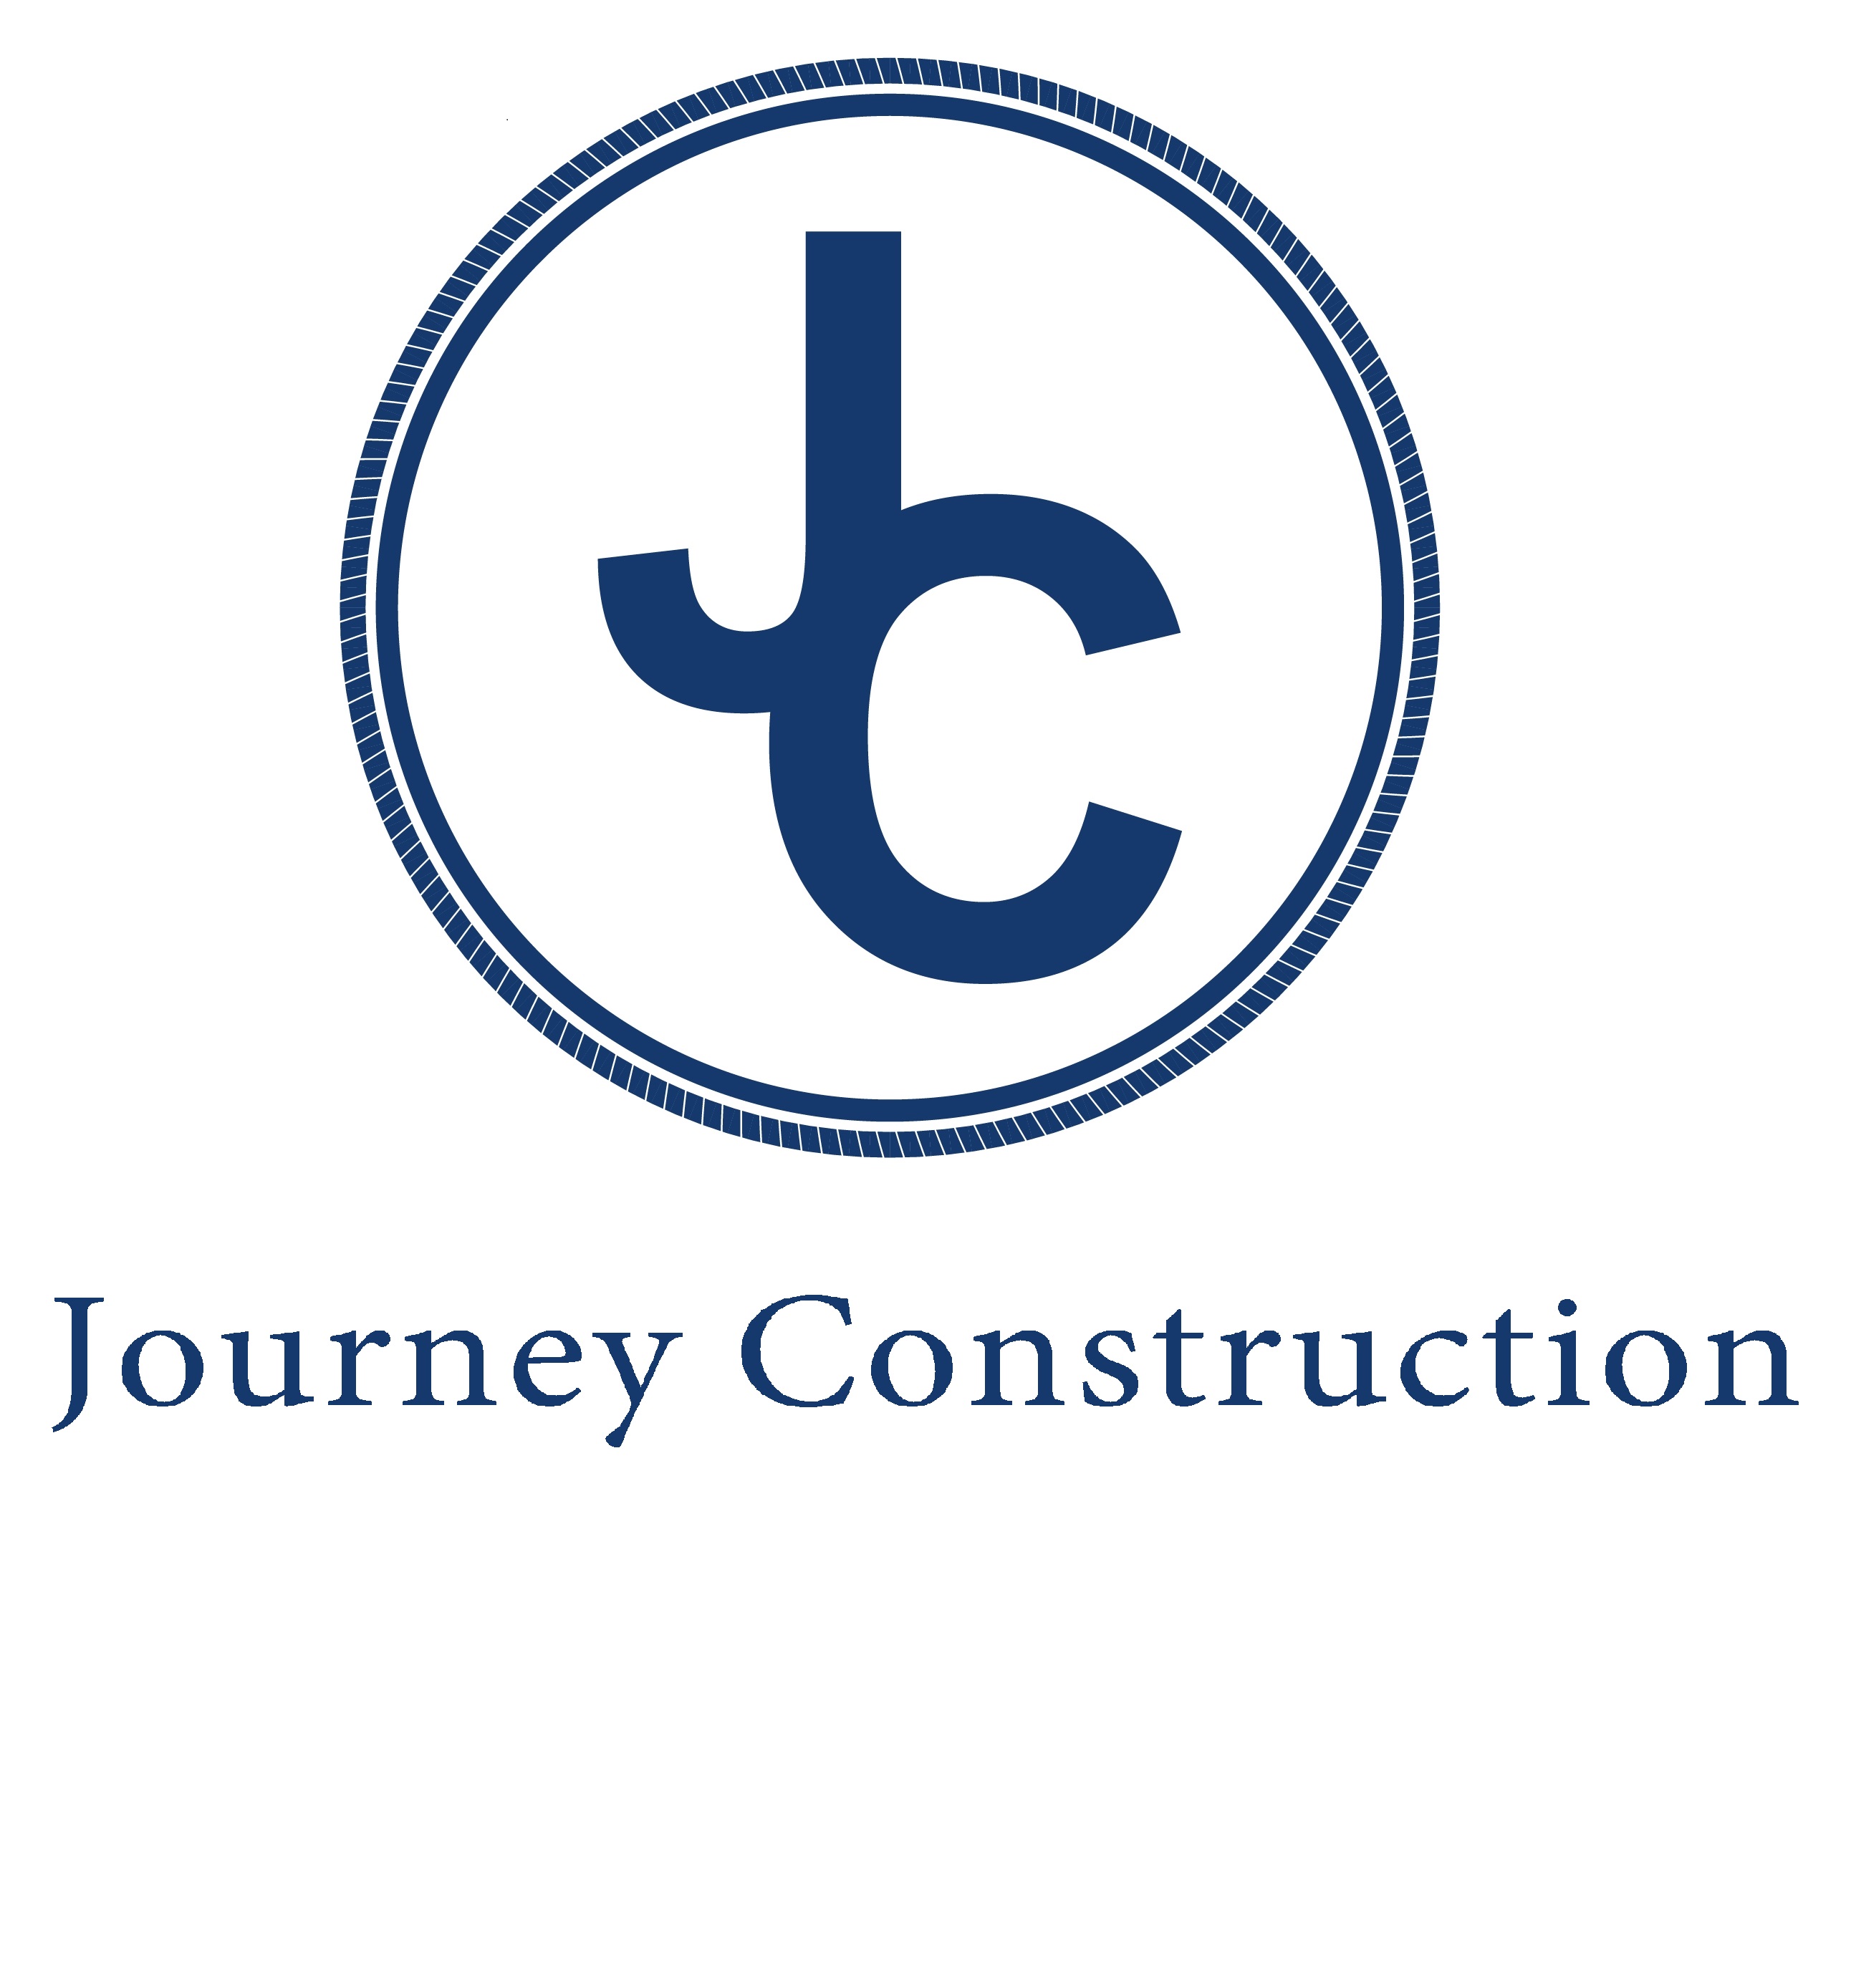 Journey Construction